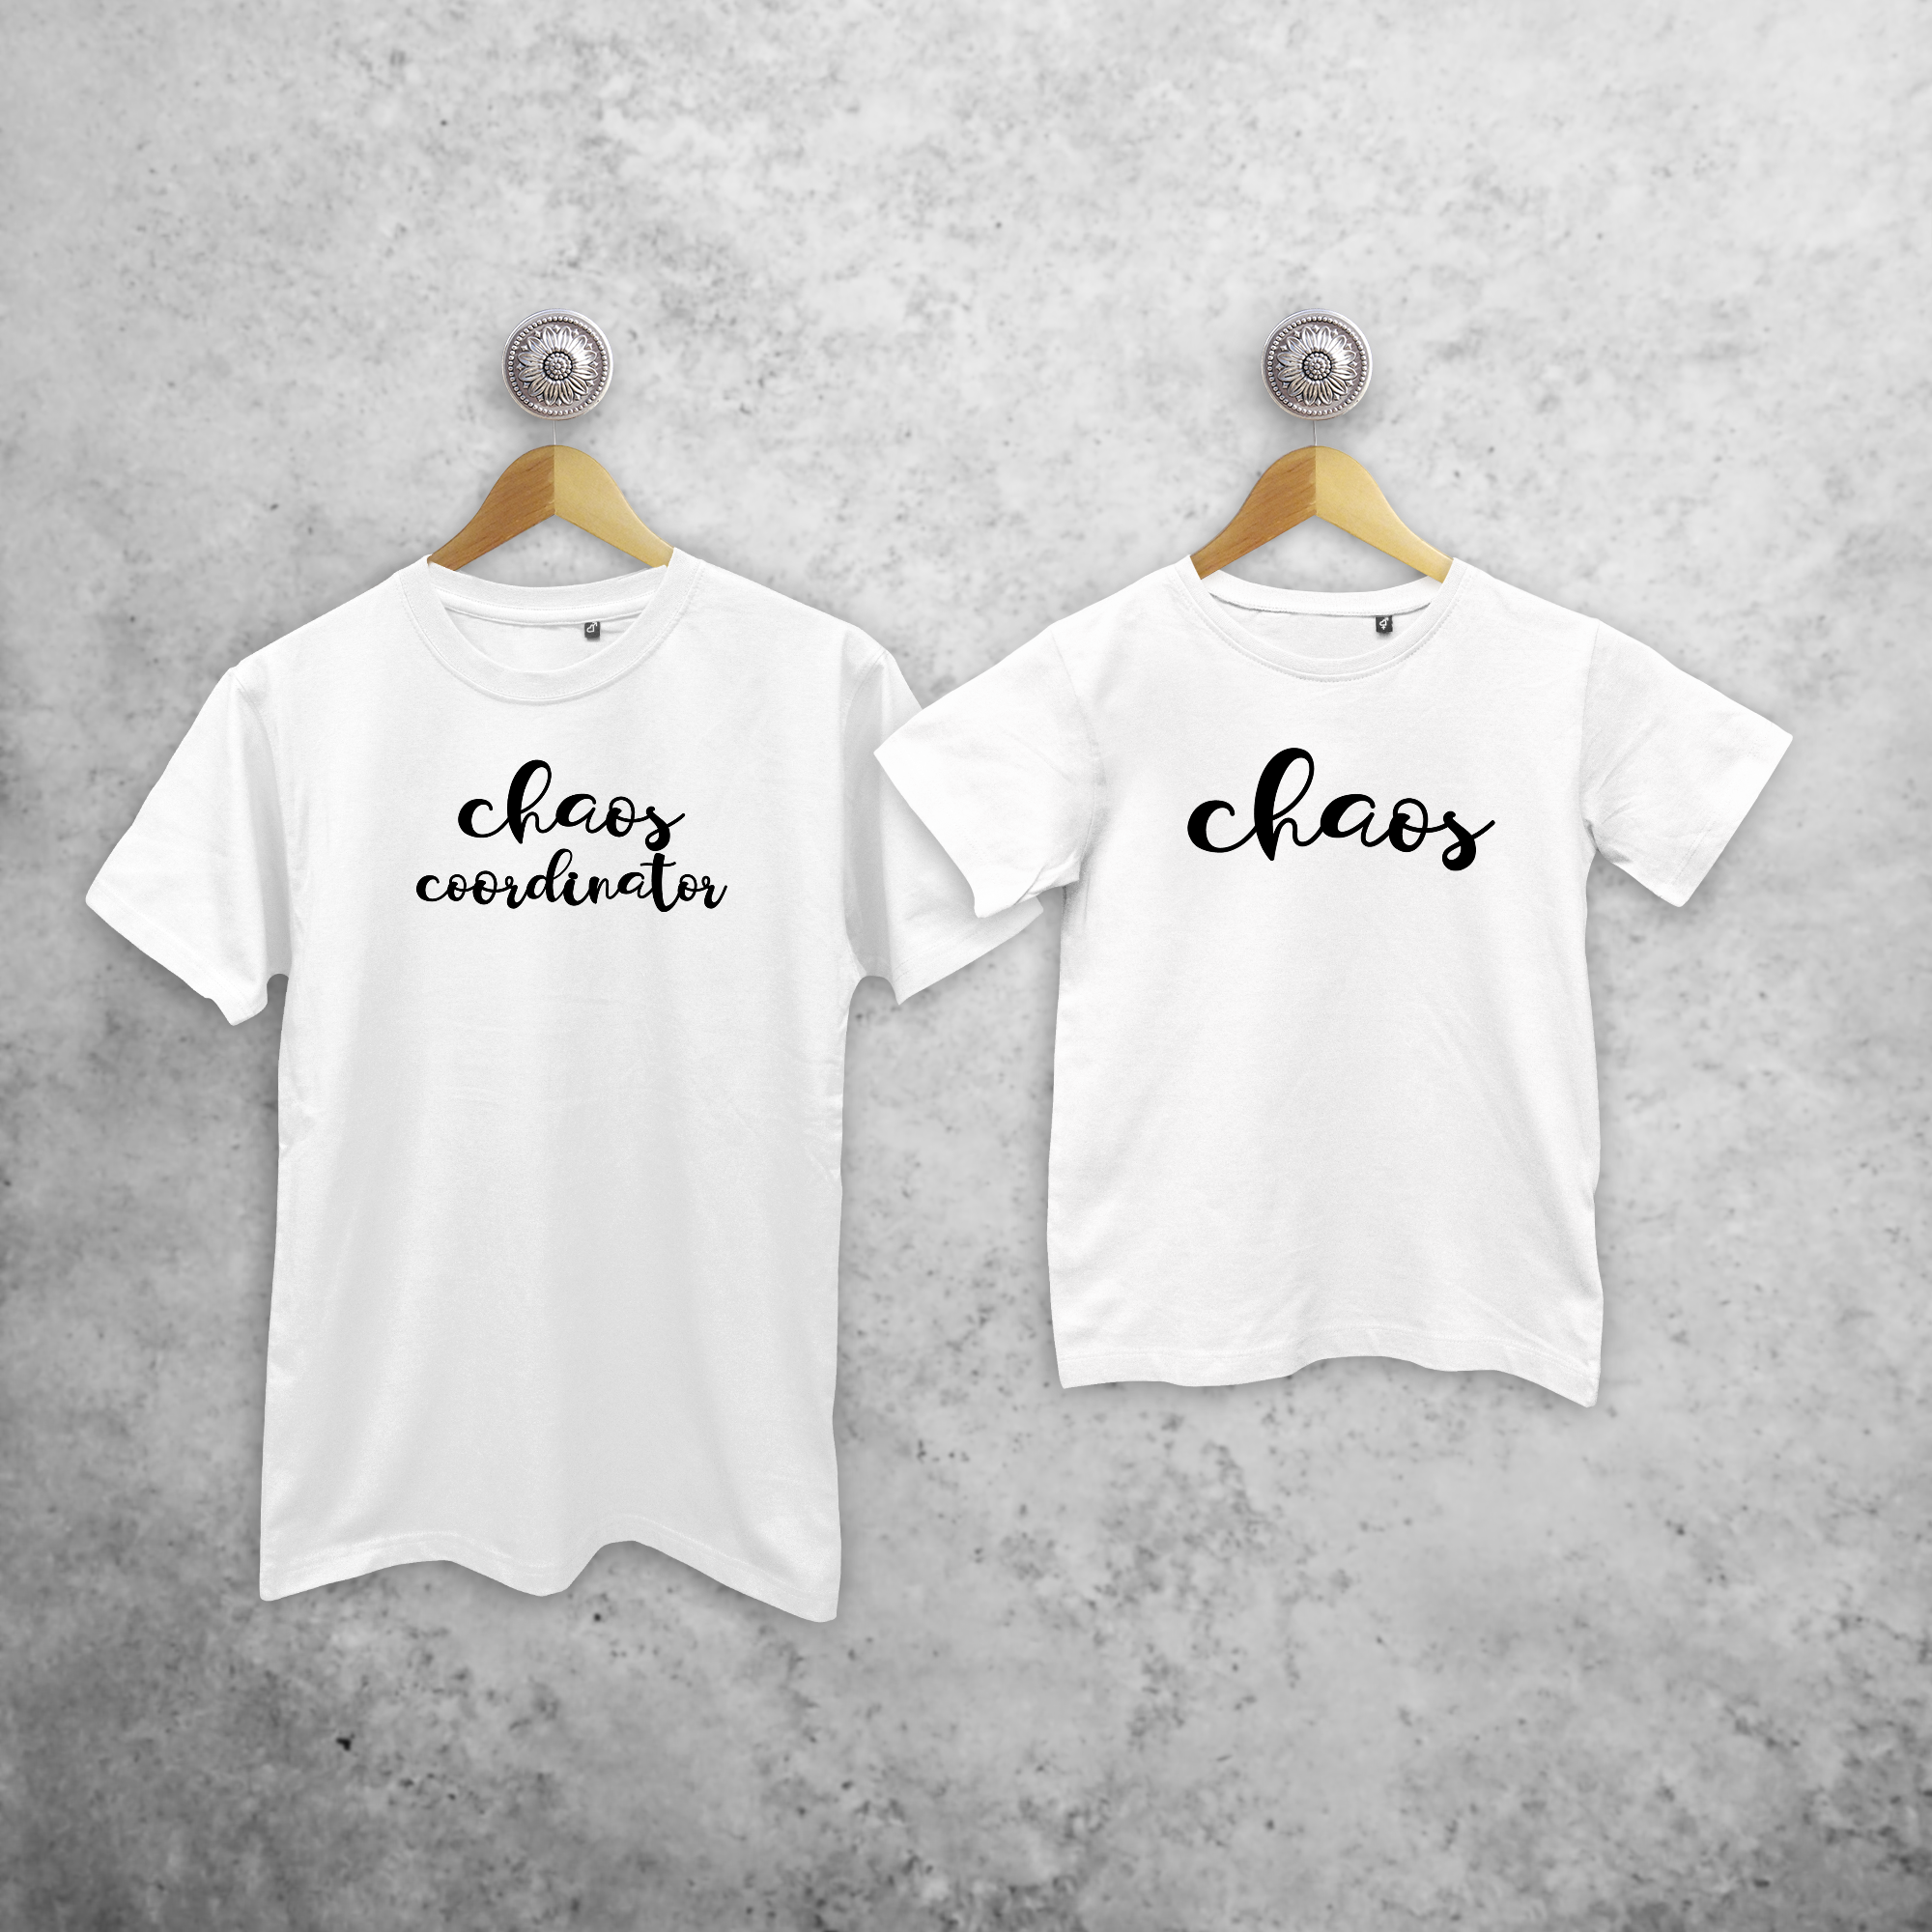 'Chaos coordinator' & 'Chaos' matching shirts